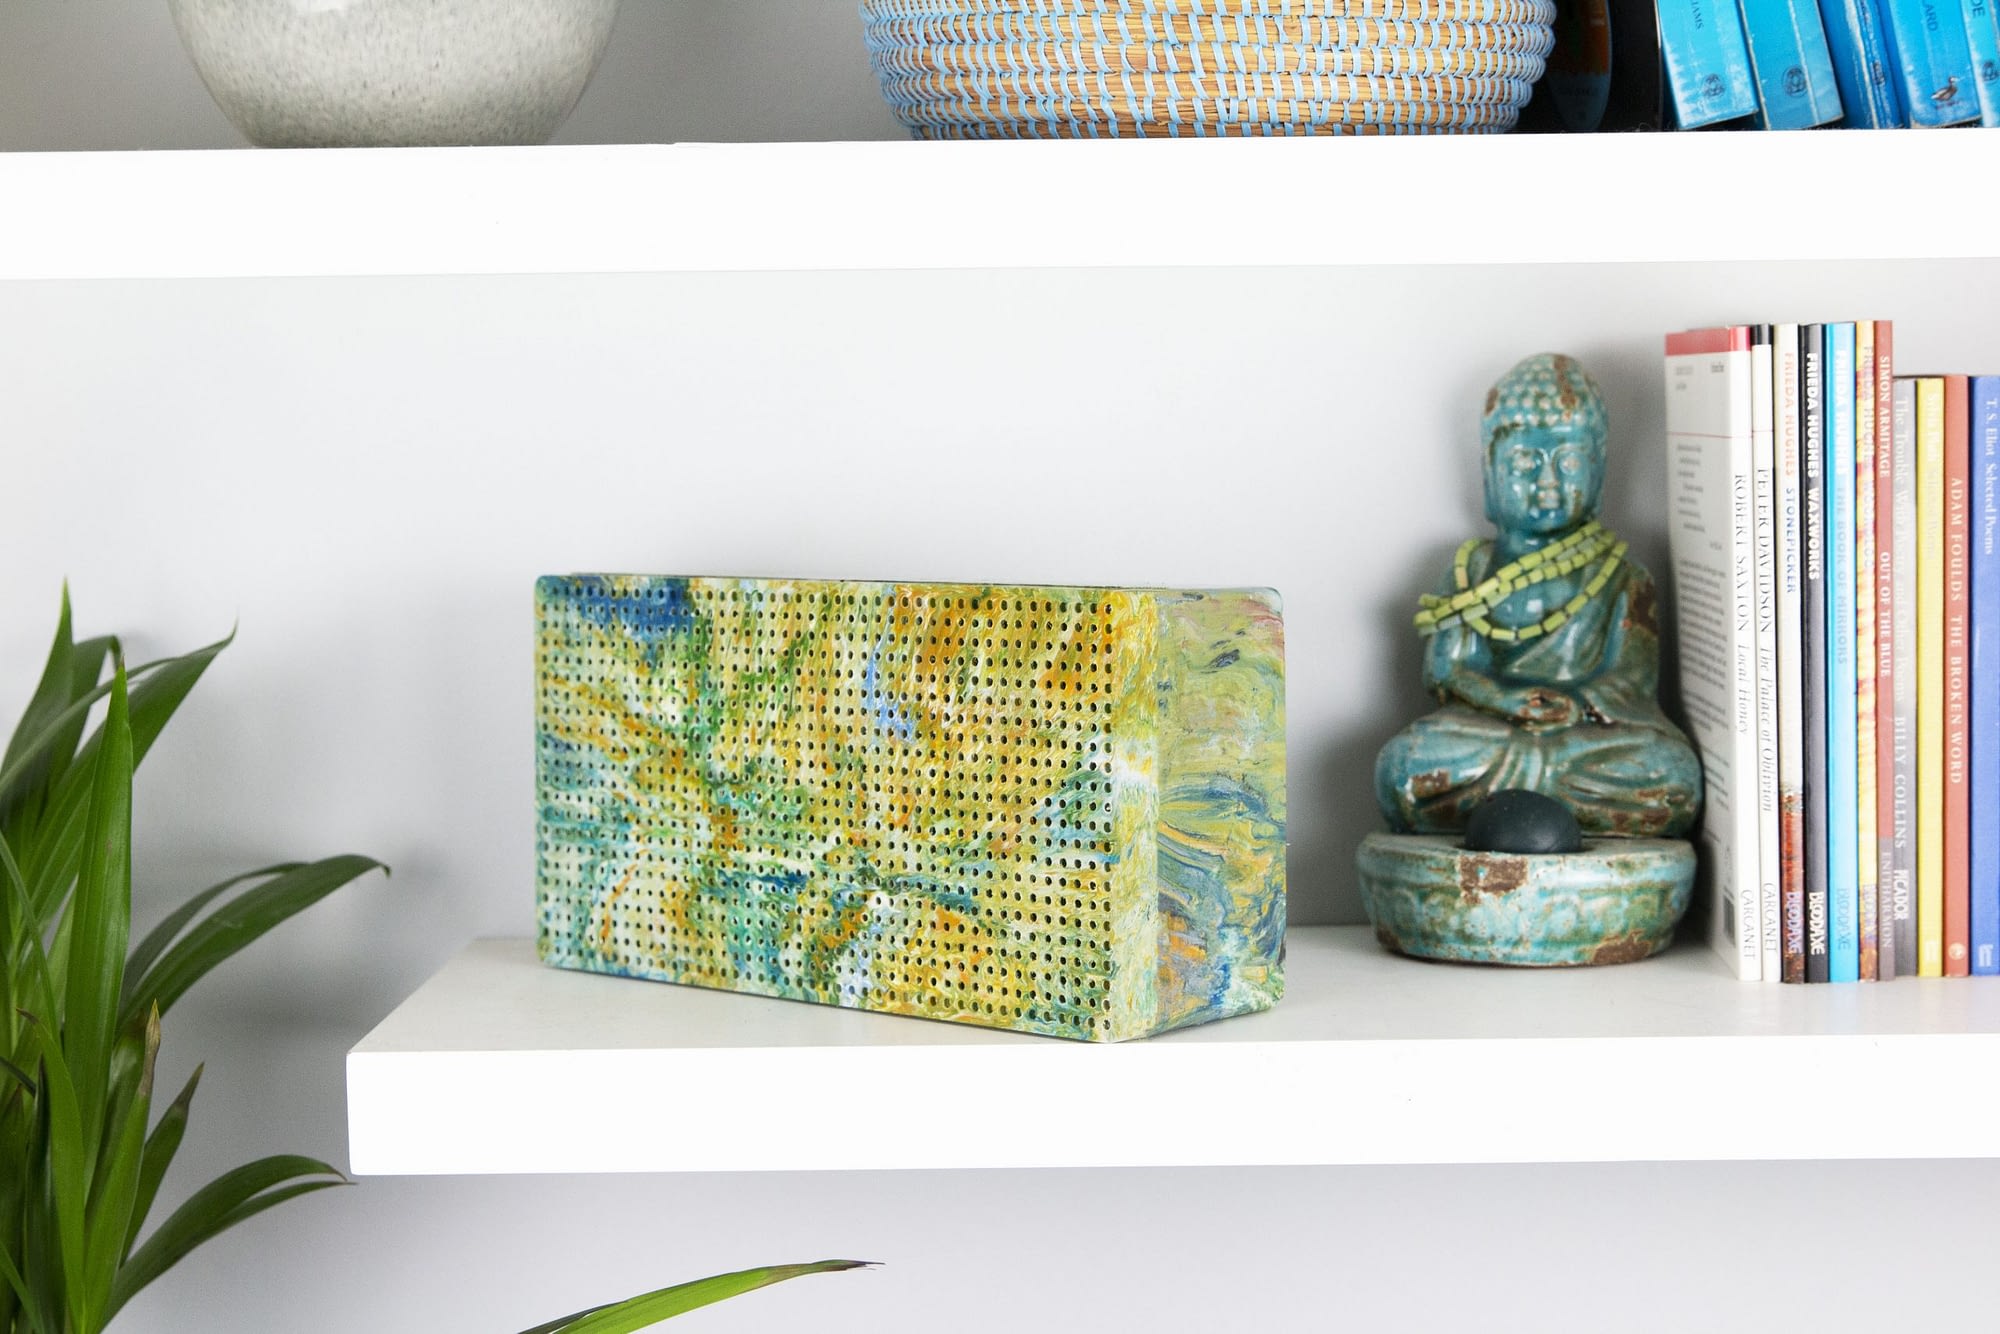 Image: Gomi Designs speaker in bright multicolors on a bookshelf